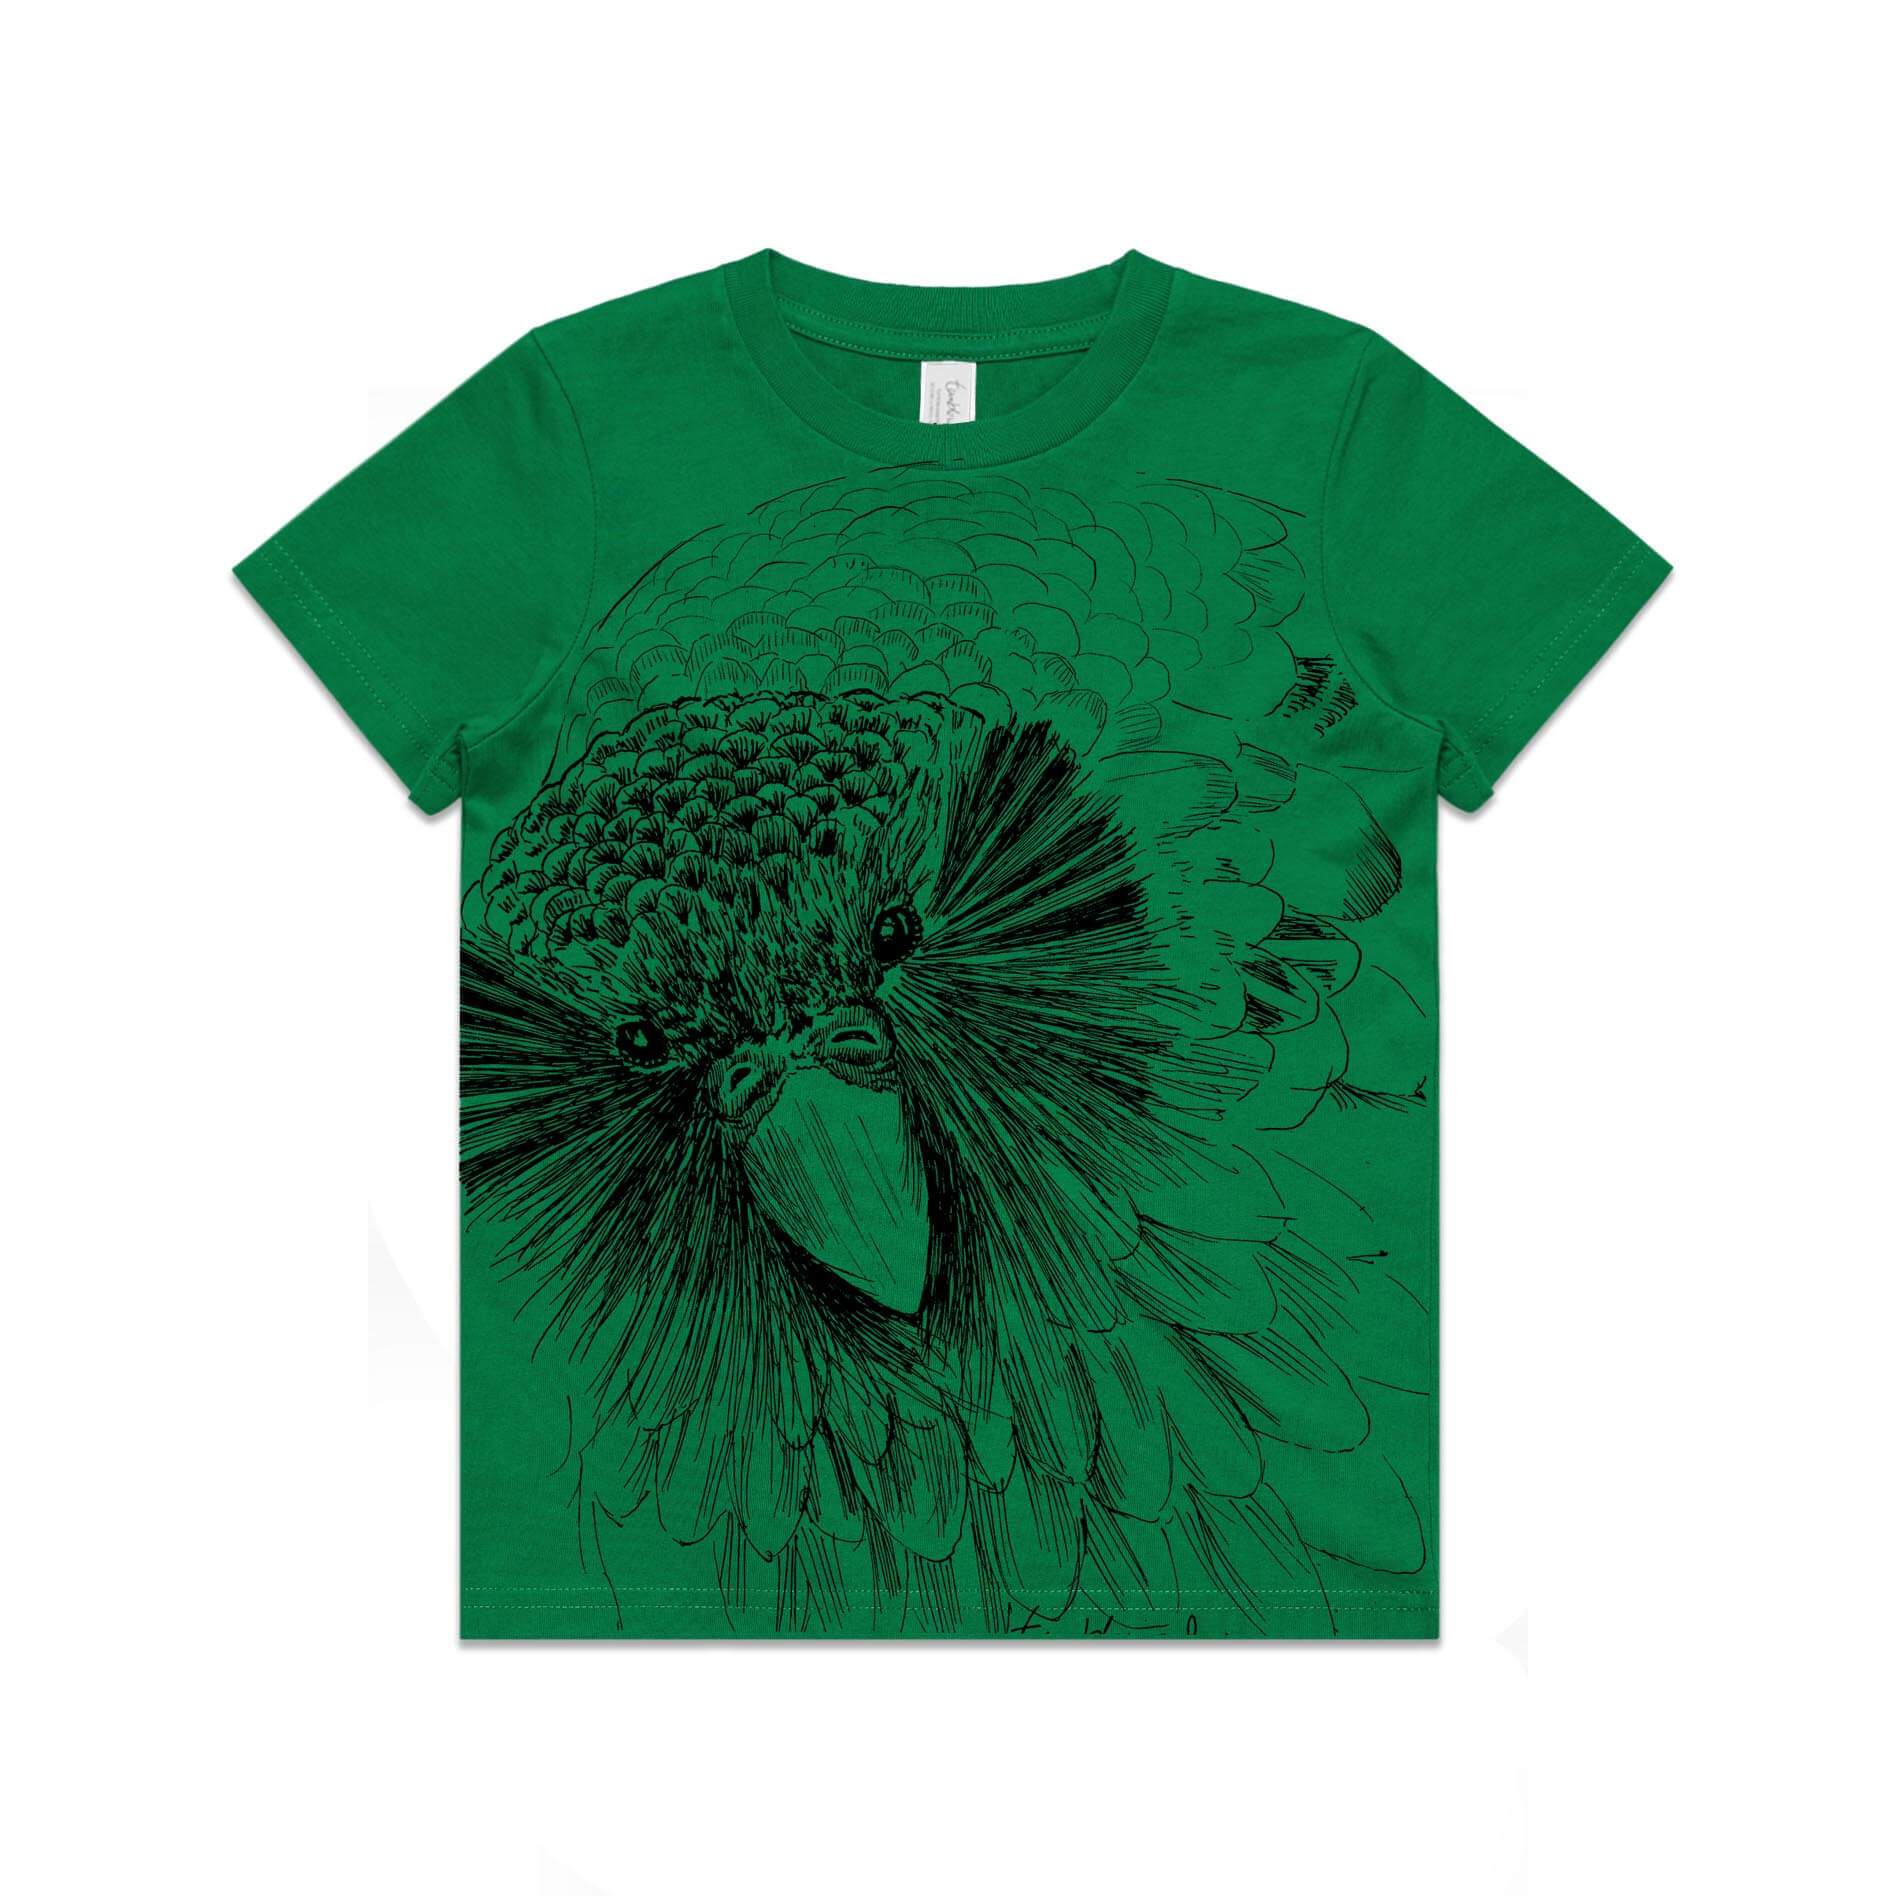 Green, cotton kids' t-shirt with screen printed Sirocco the Kakapo design.